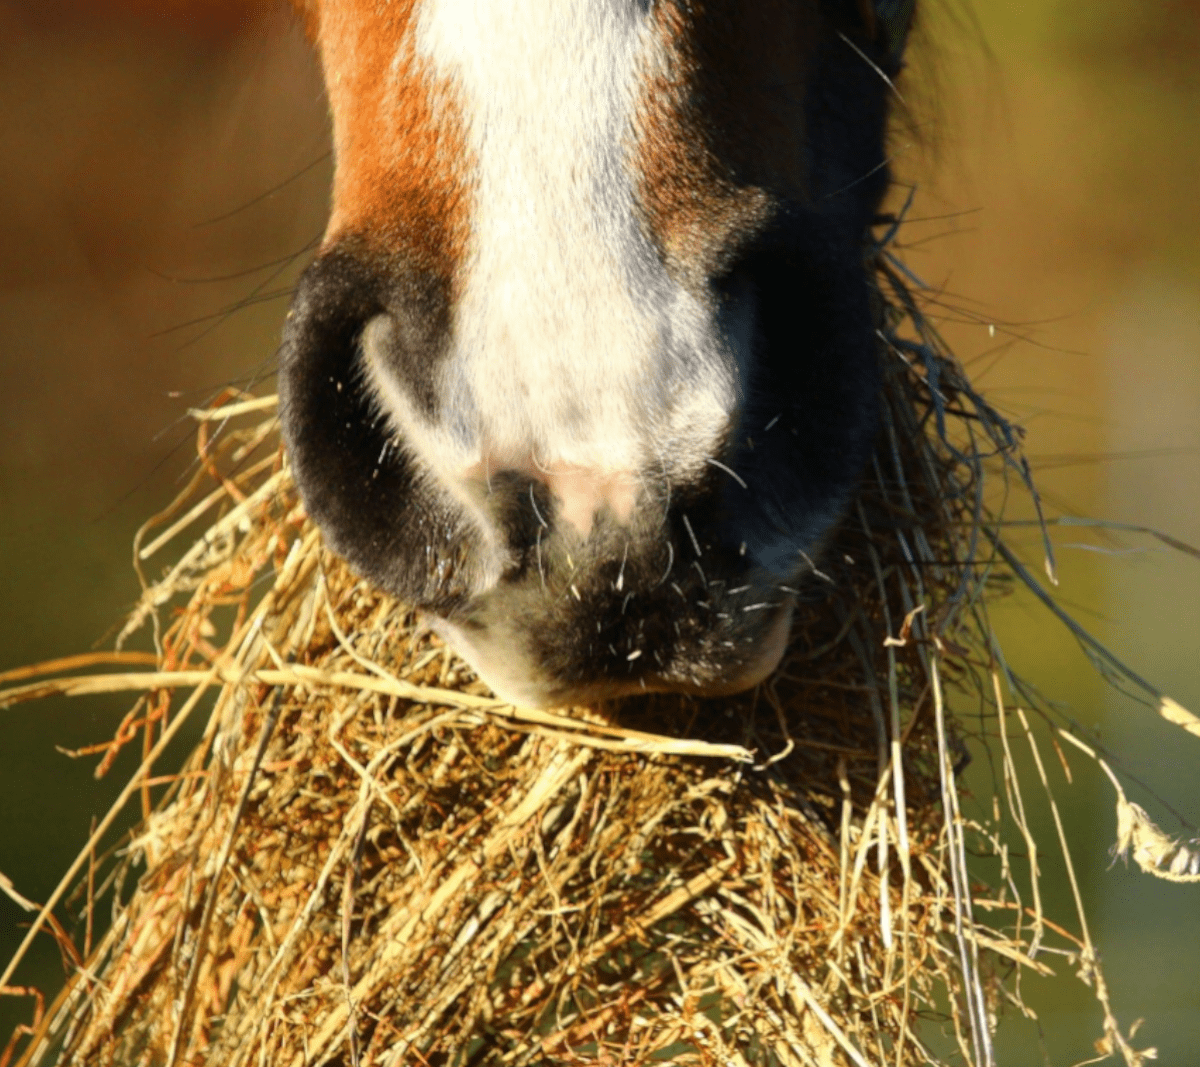 Horse_eating_hay